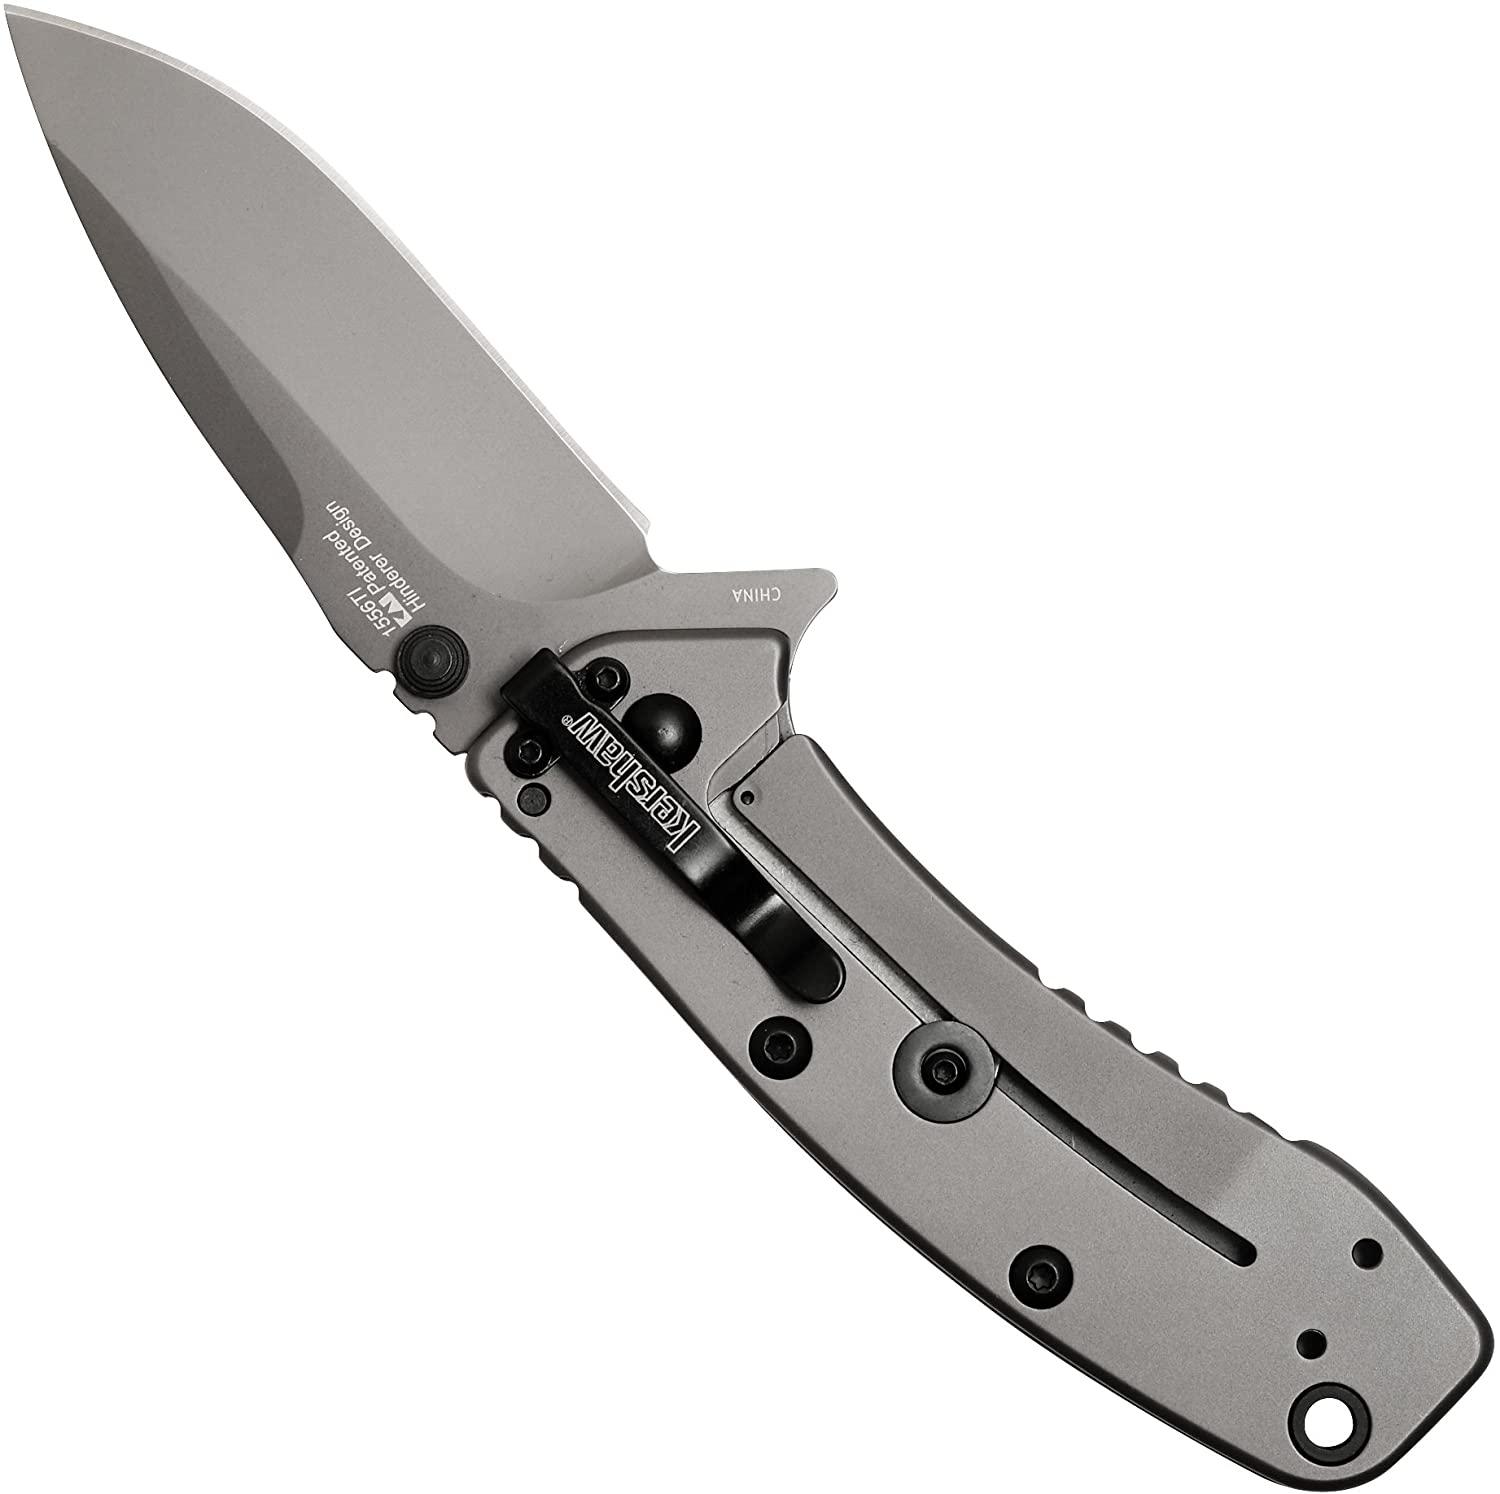 Kershaw Cryo II 3.25in Stainless Steel Pocket Knife for $17.86